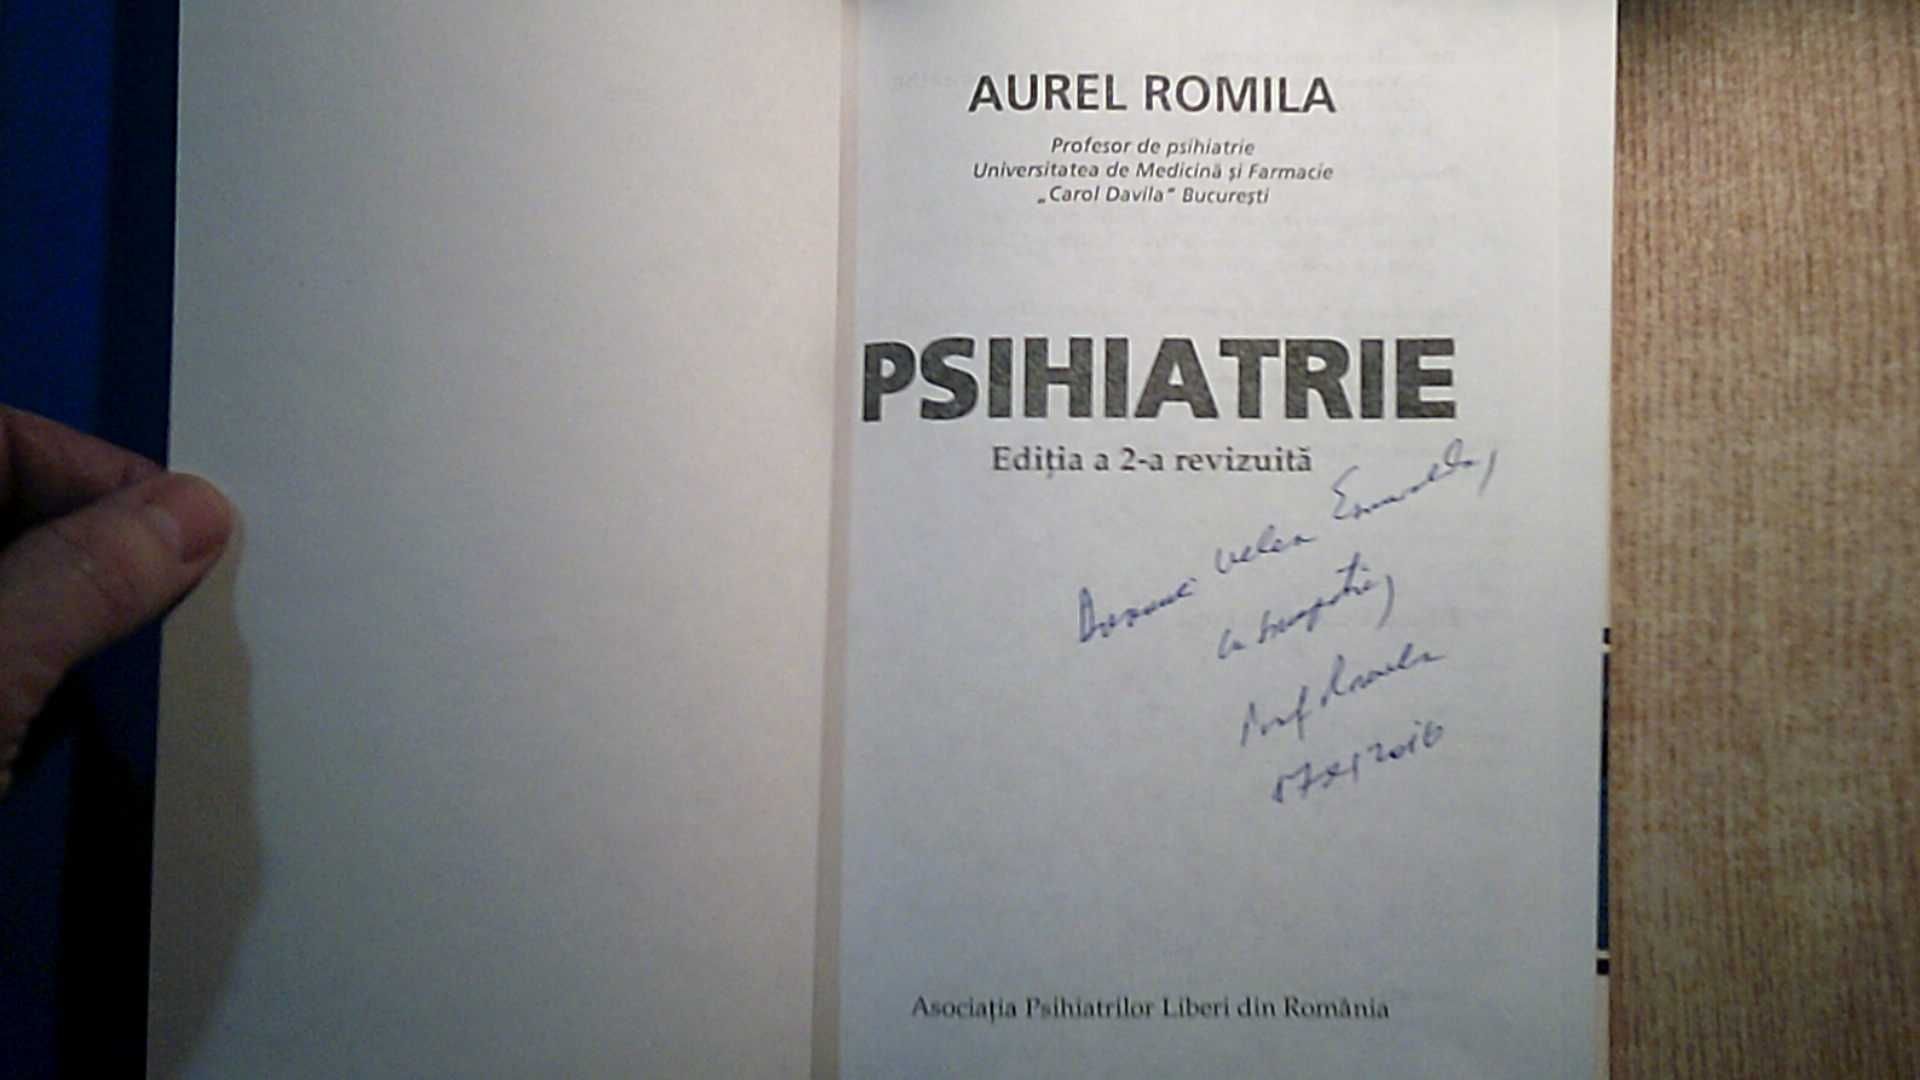 Aurel Romila (autograf) - Psihiatrie - Editia a 2-a revizuita (2004)